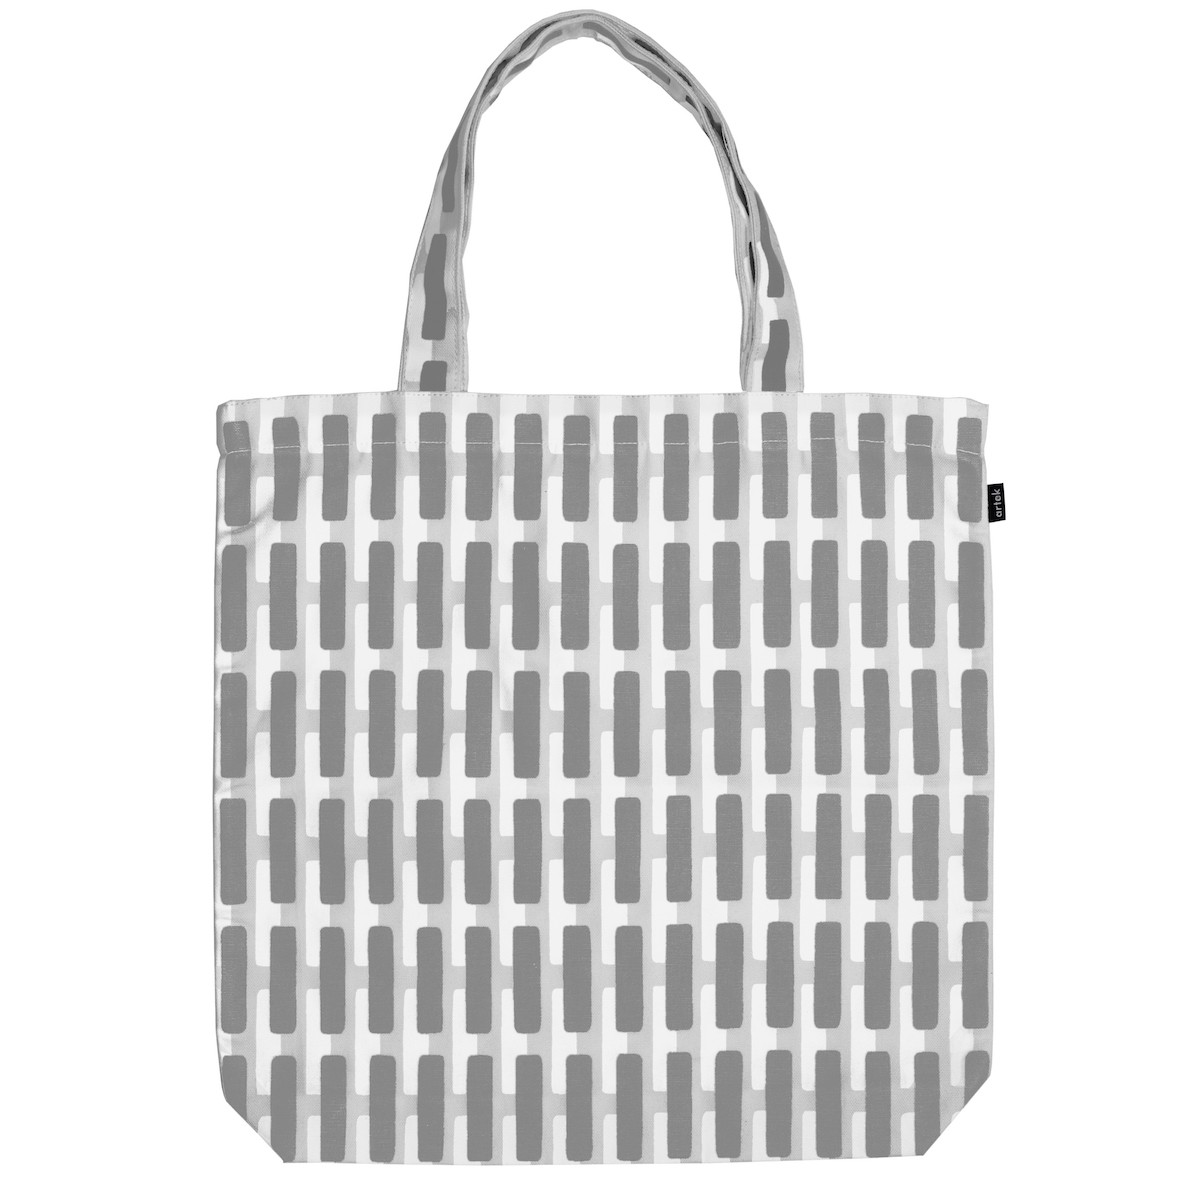 Tote bag 41x41cm - Siena grey / light grey shadow